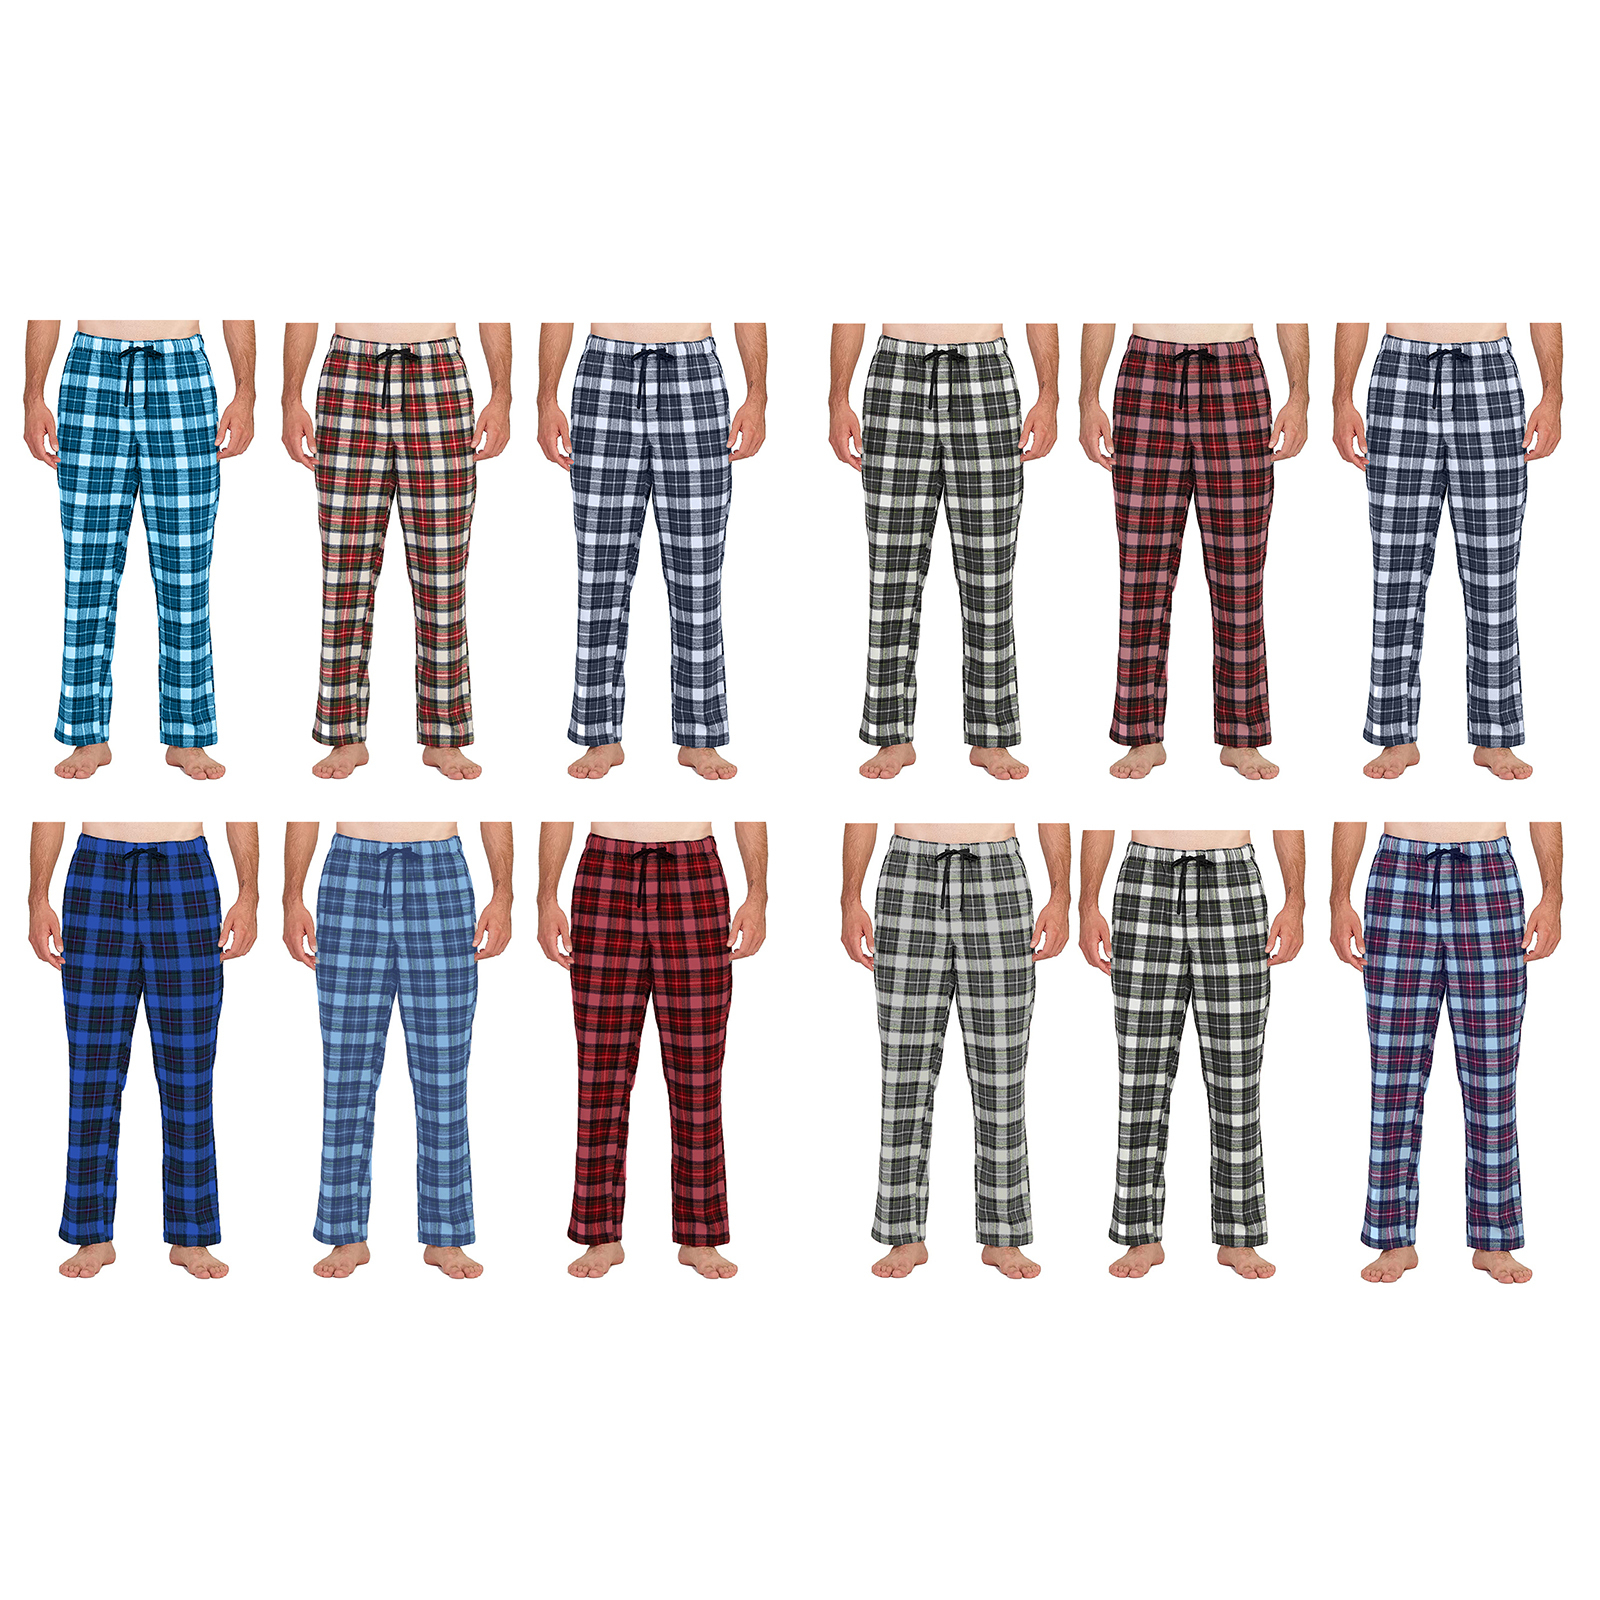 2-Pack: Men's Soft 100% Cotton Flannel Plaid Lounge Pajama Sleep Pants - 2X-Large